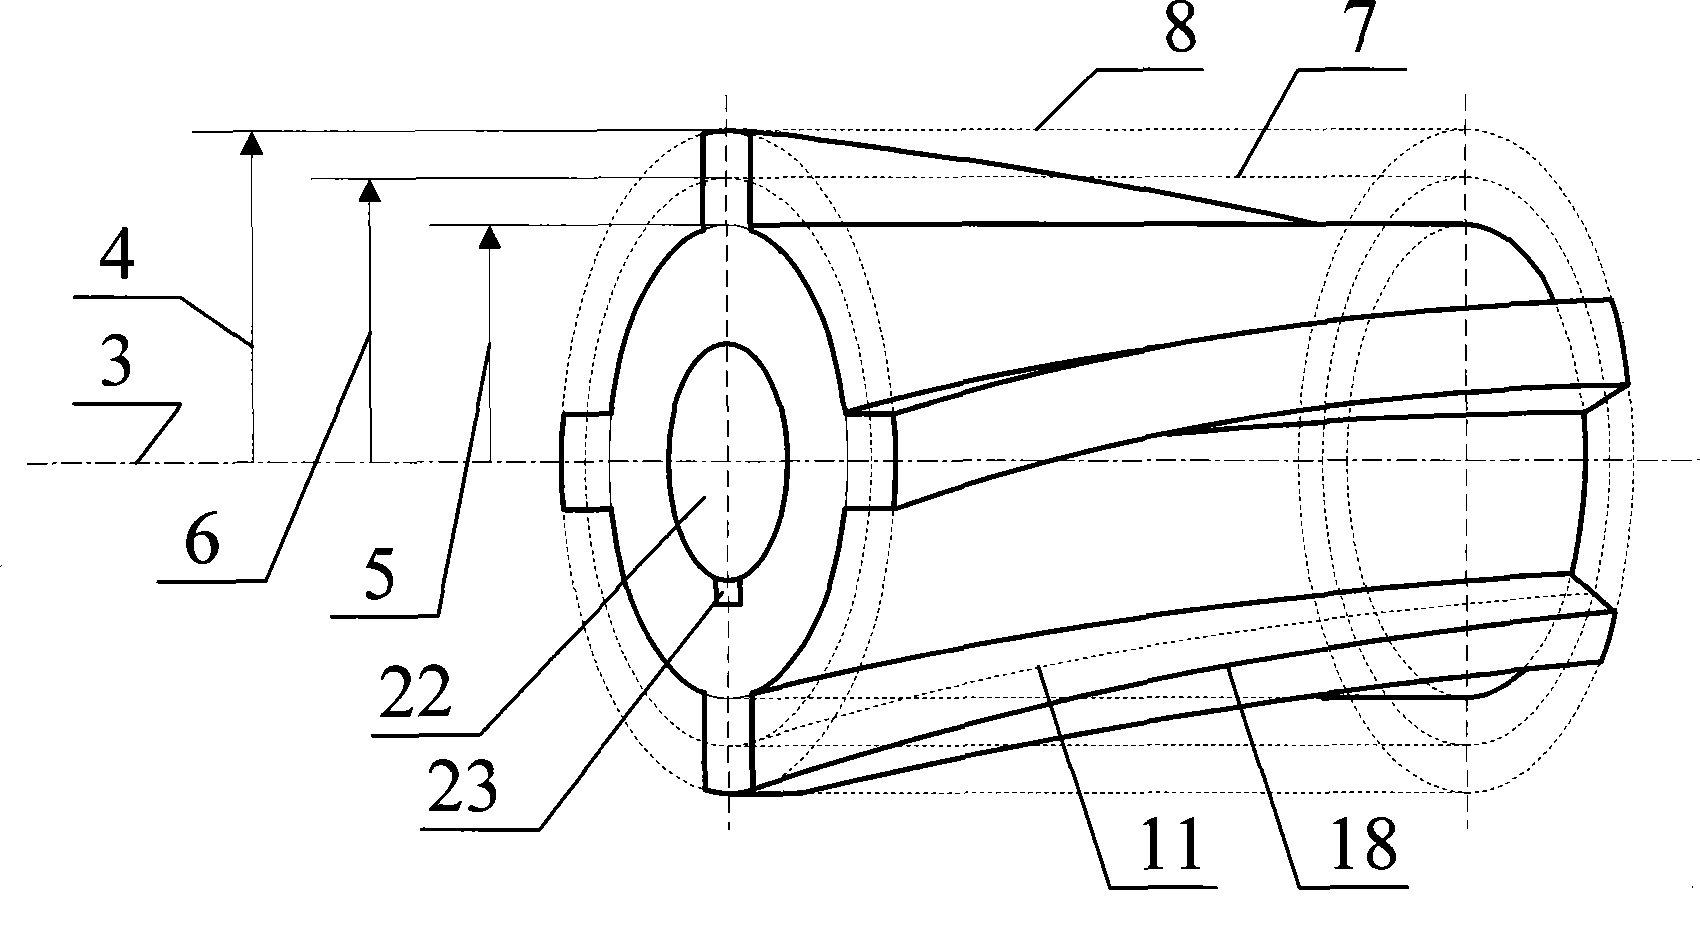 Self-wind cooled rotor magneto resistance genus motor